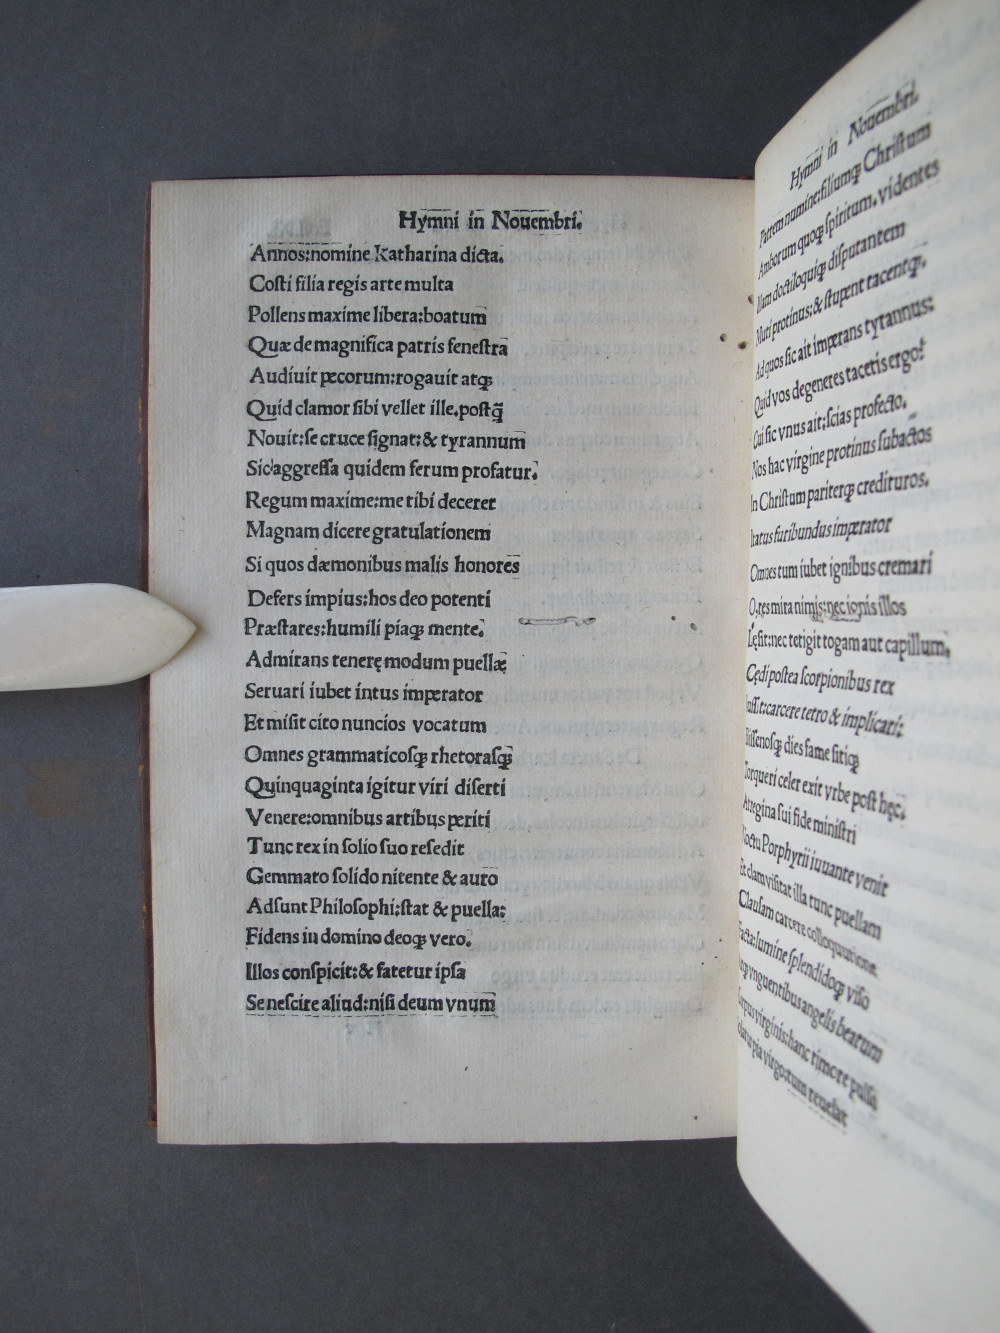 Folio 61 verso